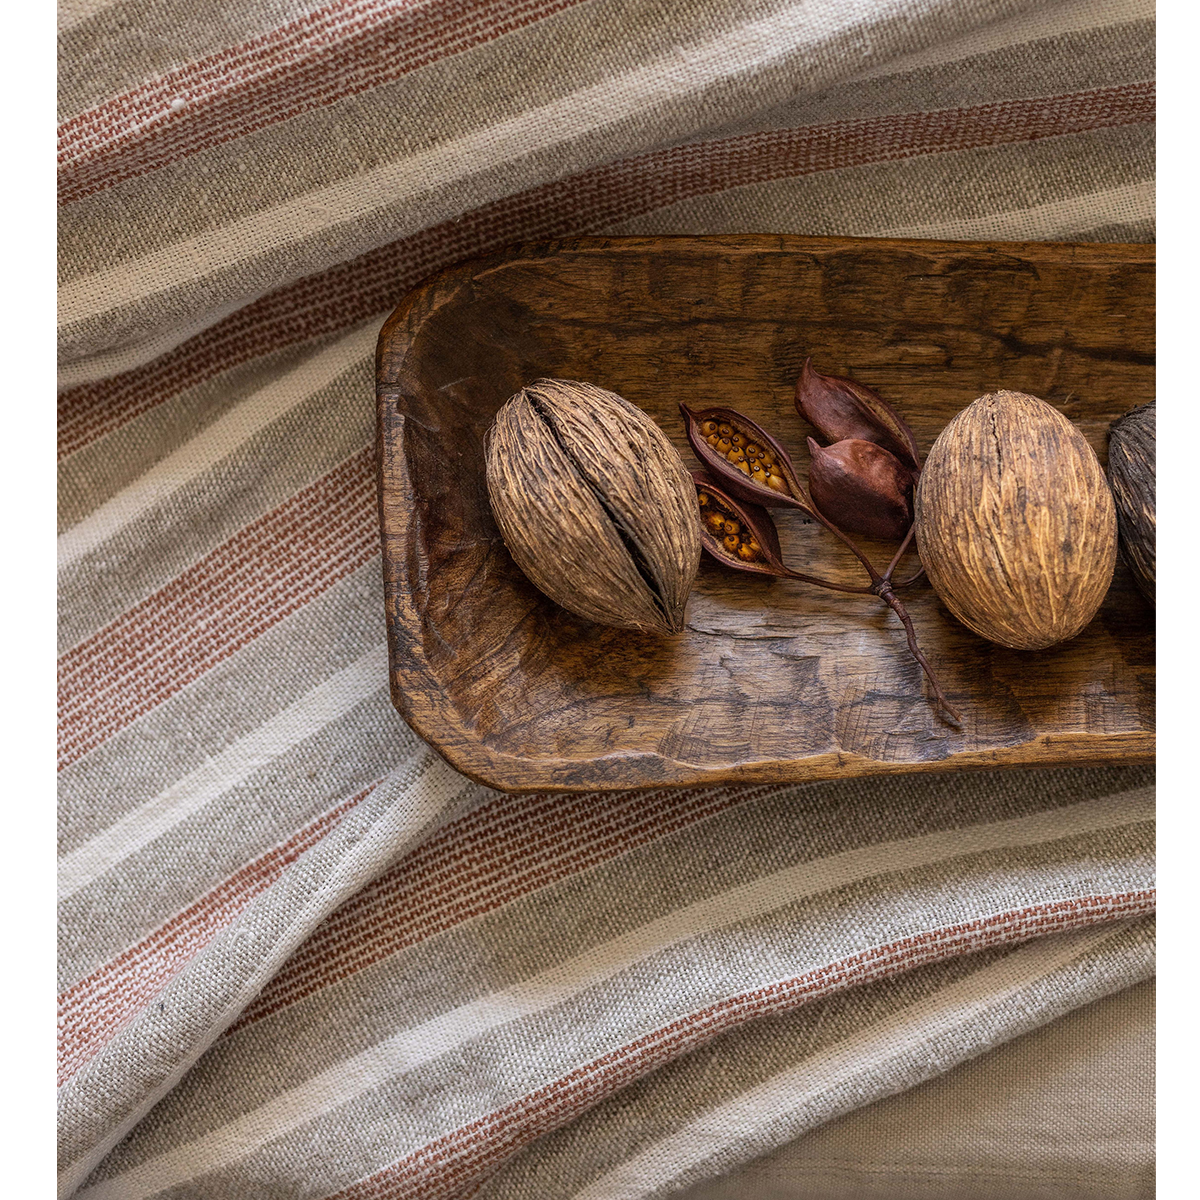 montecito blanket - terra cotta/natural color - pom pom at home